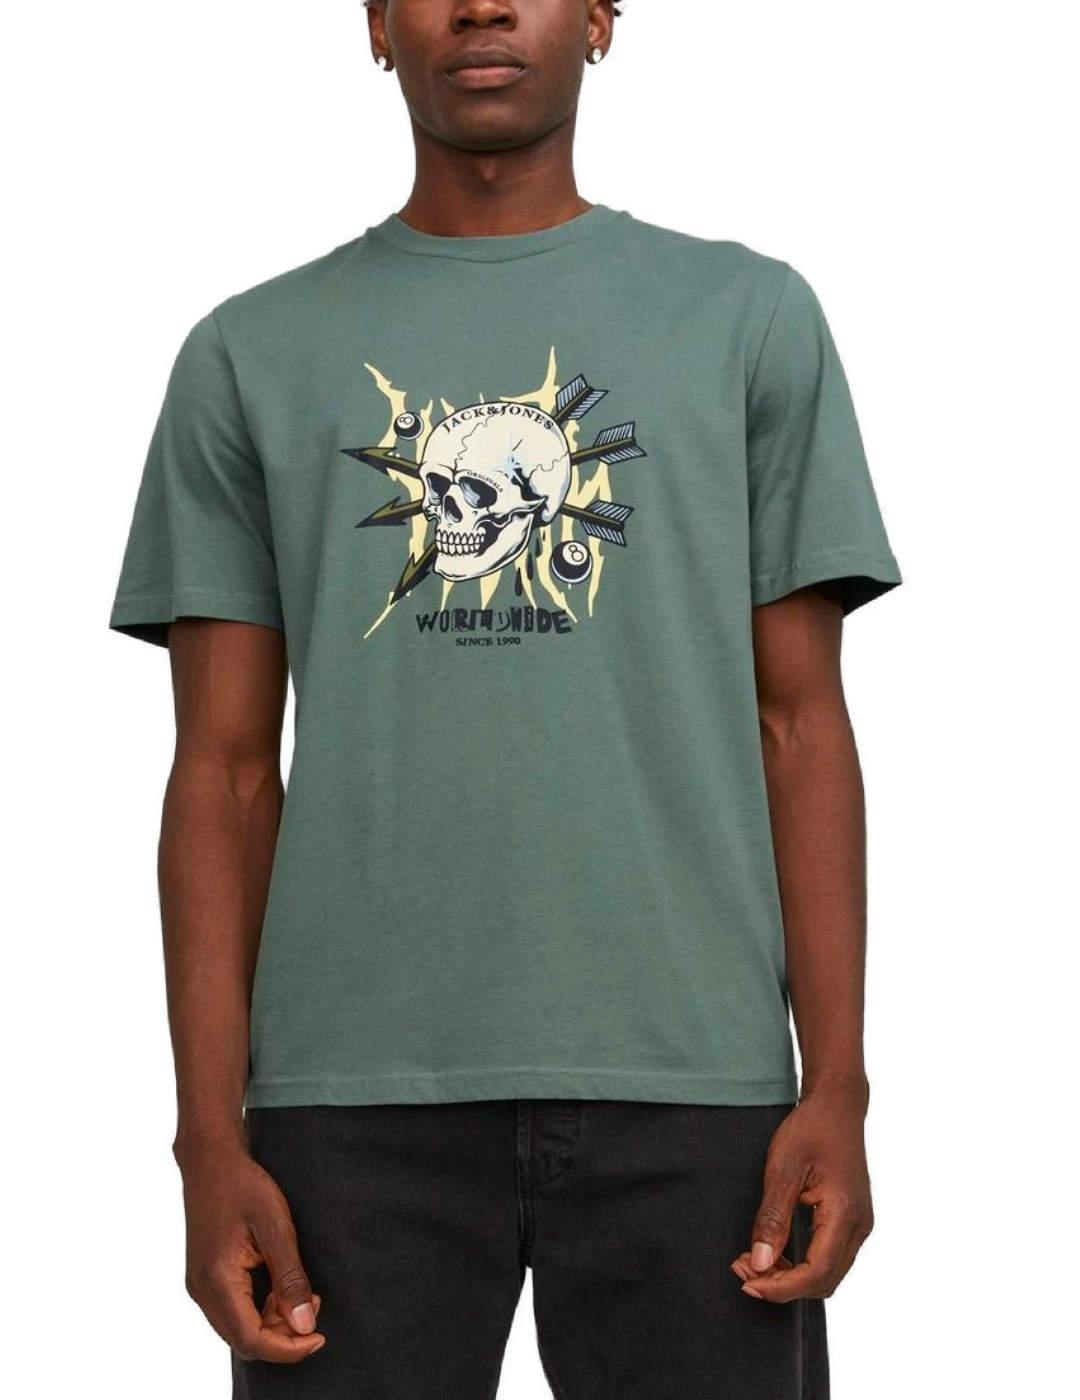 Camiseta Jack&Jones Heavens verde manga corta para hombre